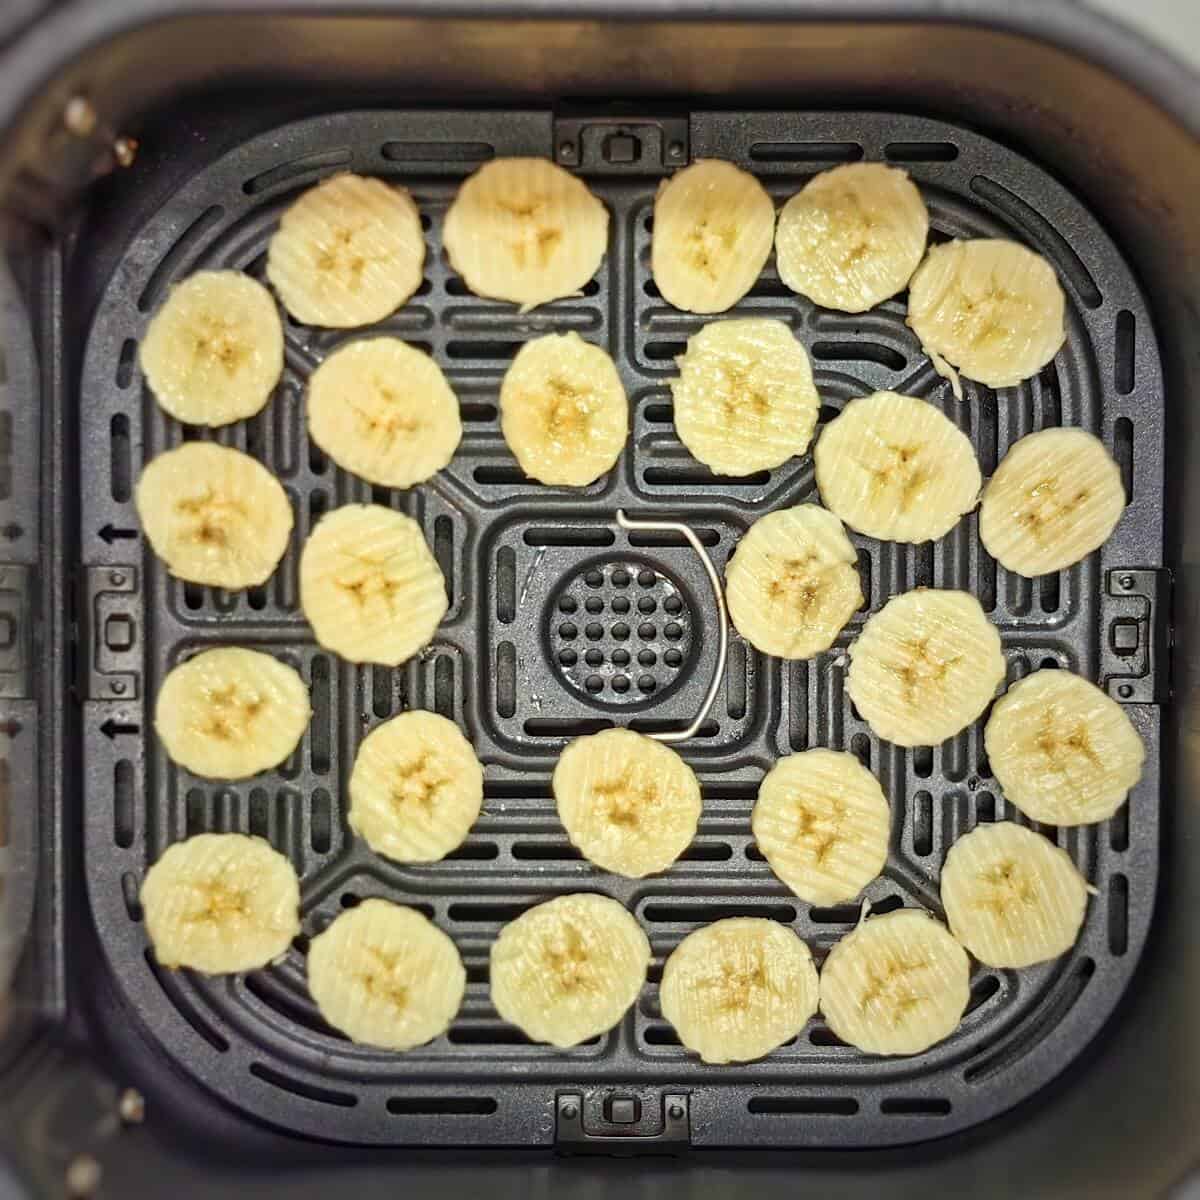 banana chips inside air fryer basket